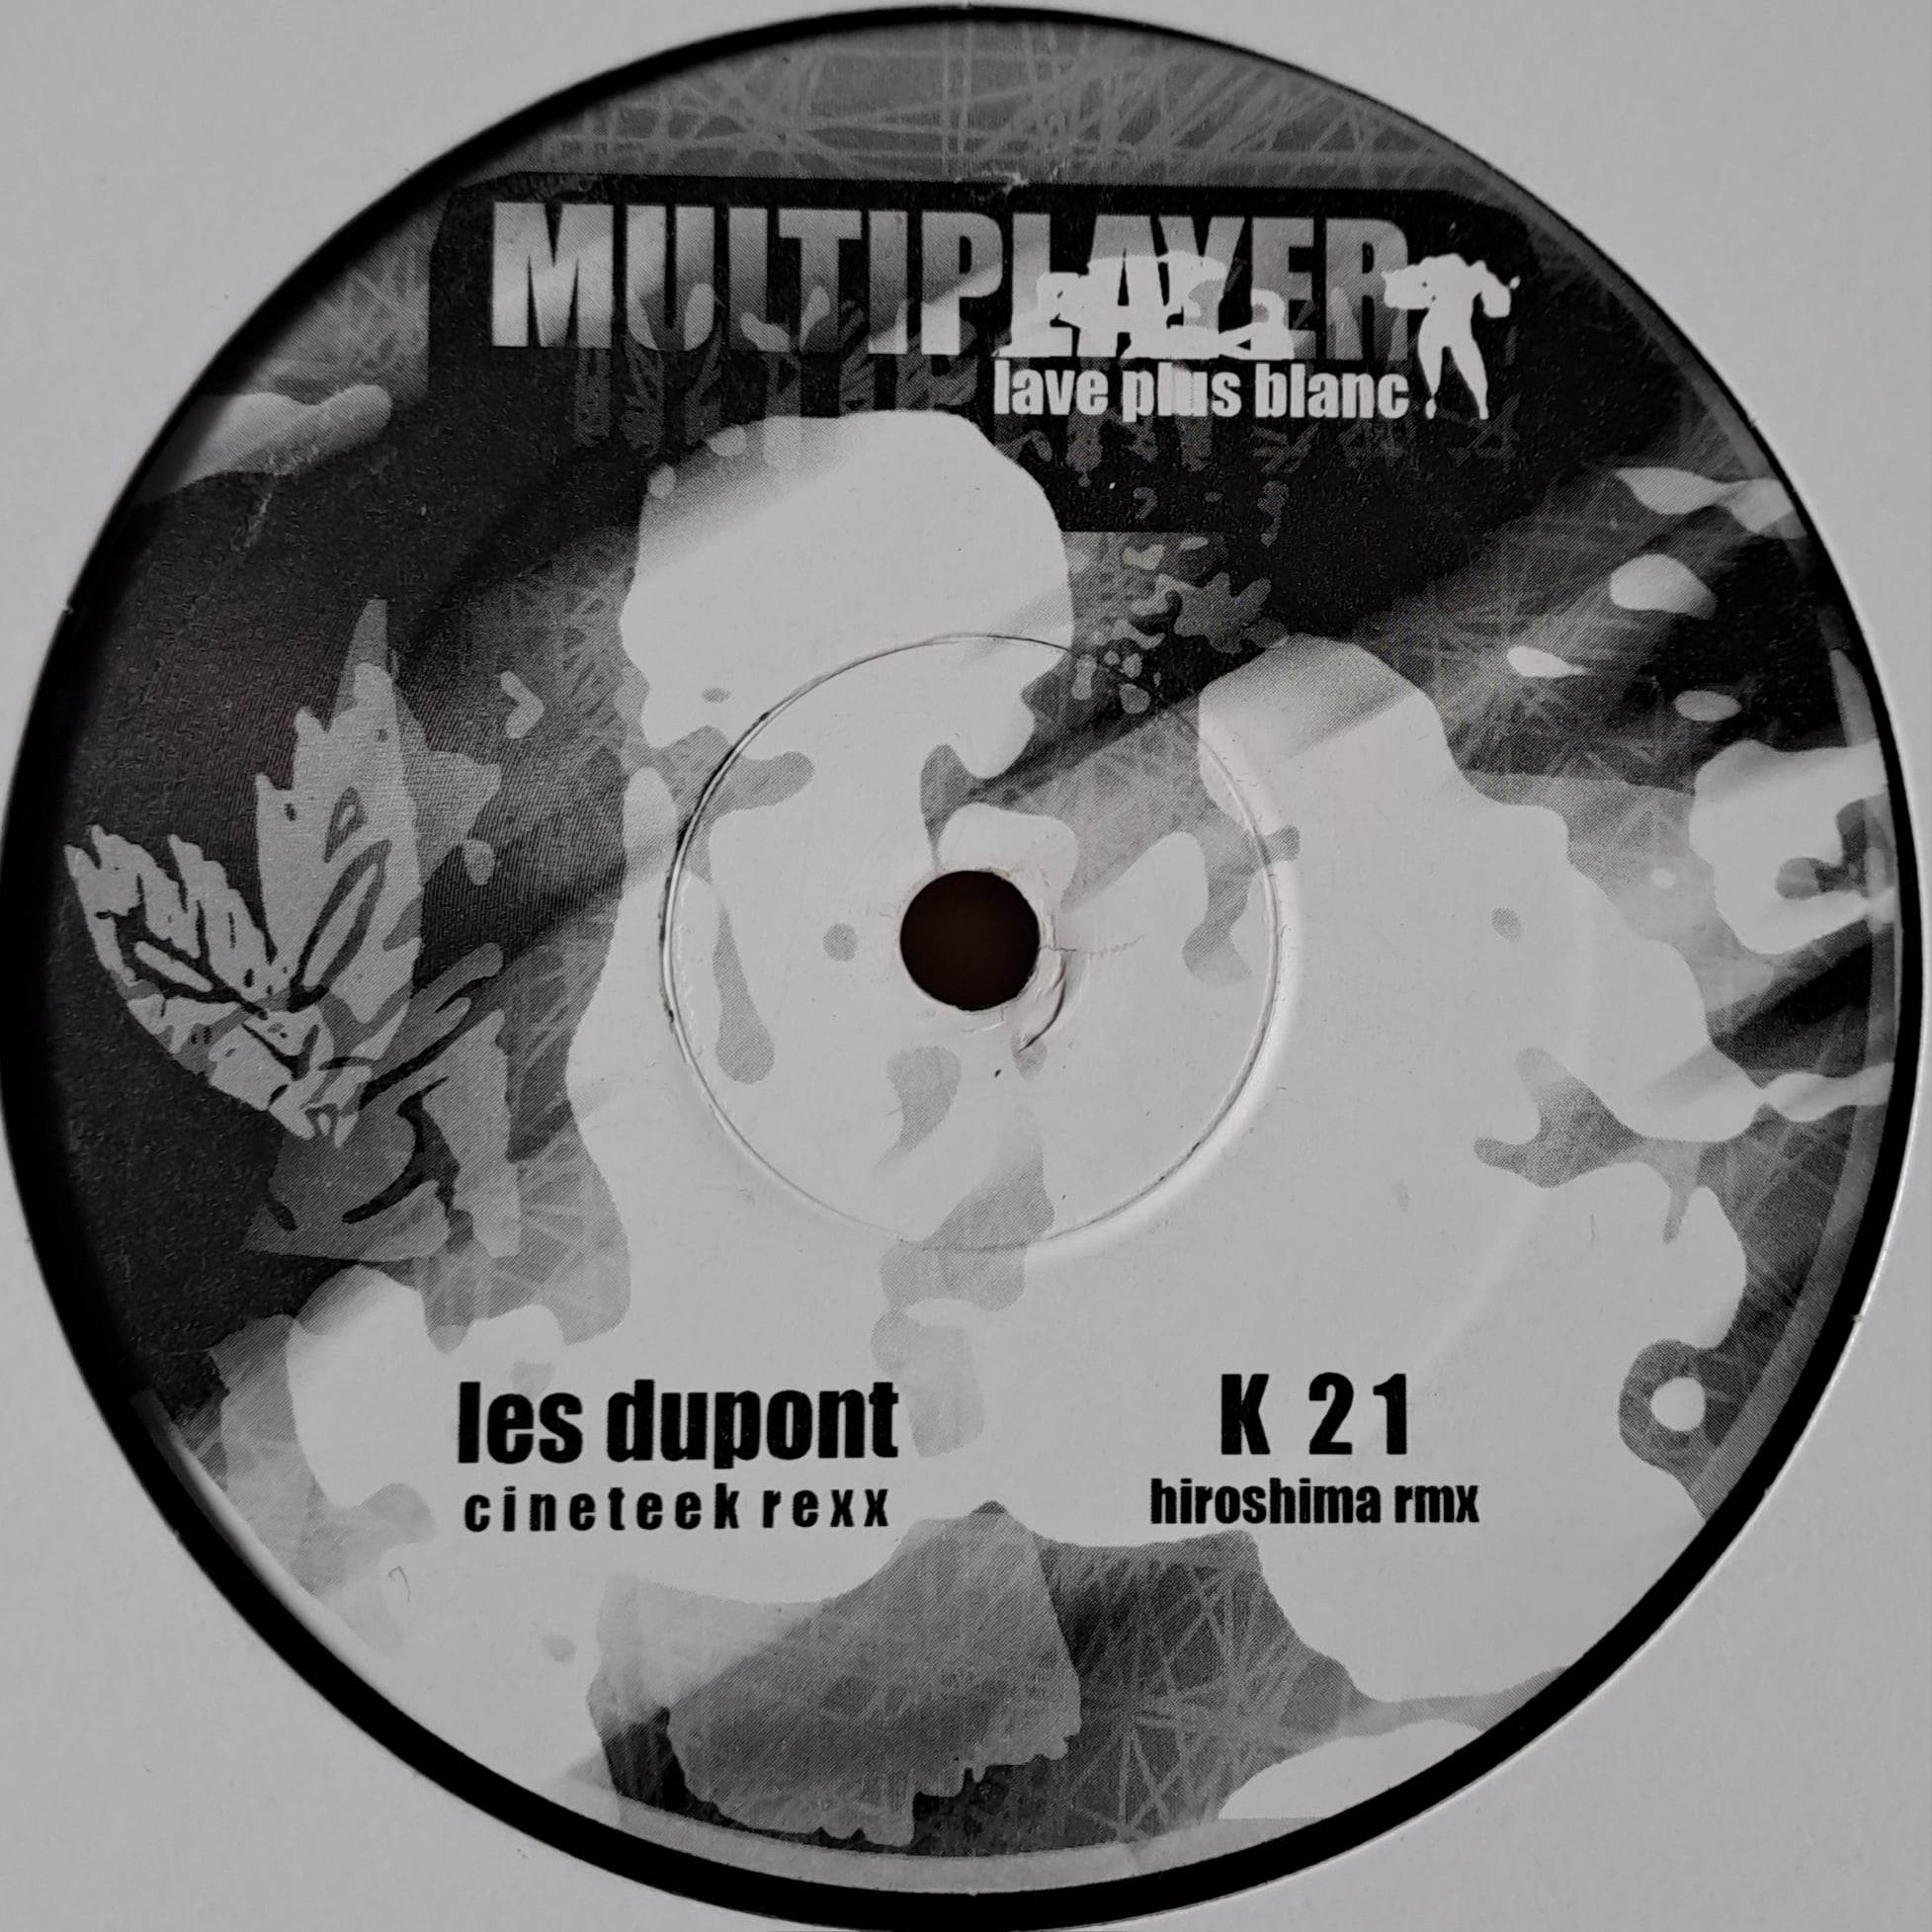 Multiplayer 02 - vinyle hardcore